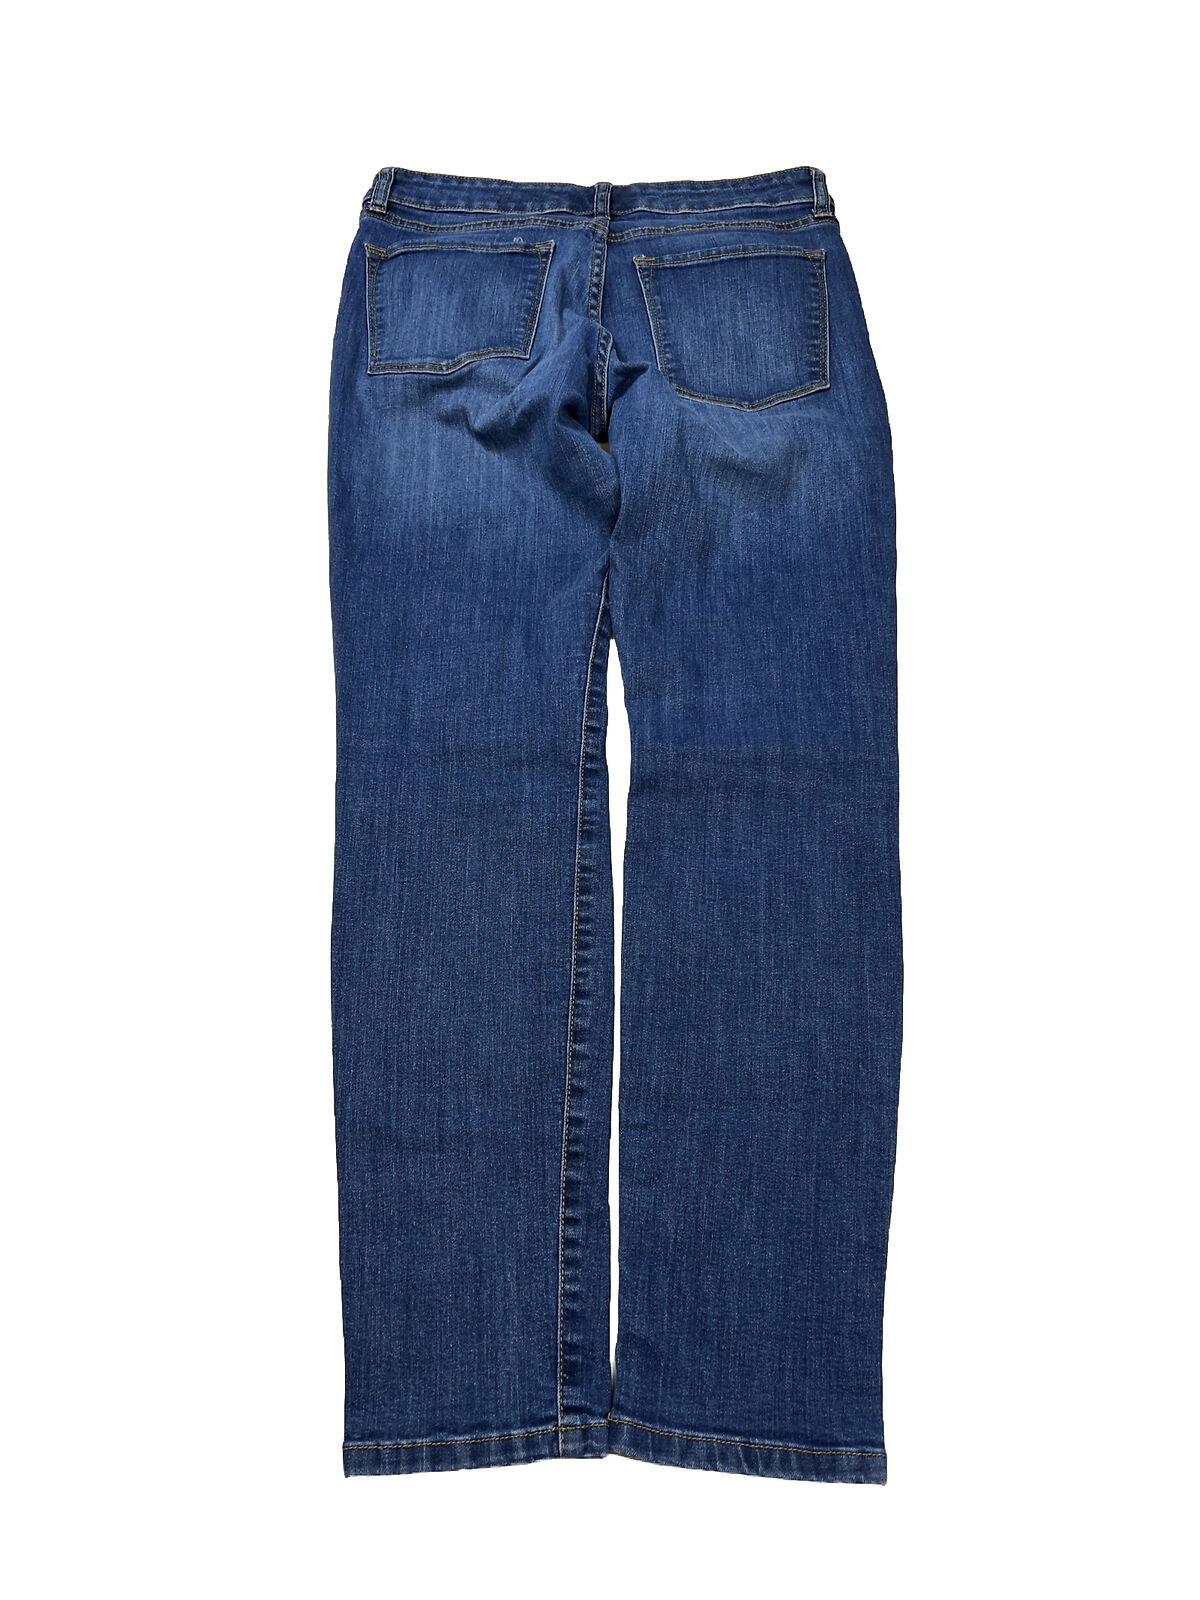 Banana Republic Women's Dark Wash Skinny Fit Stretch Jeans - 28/6